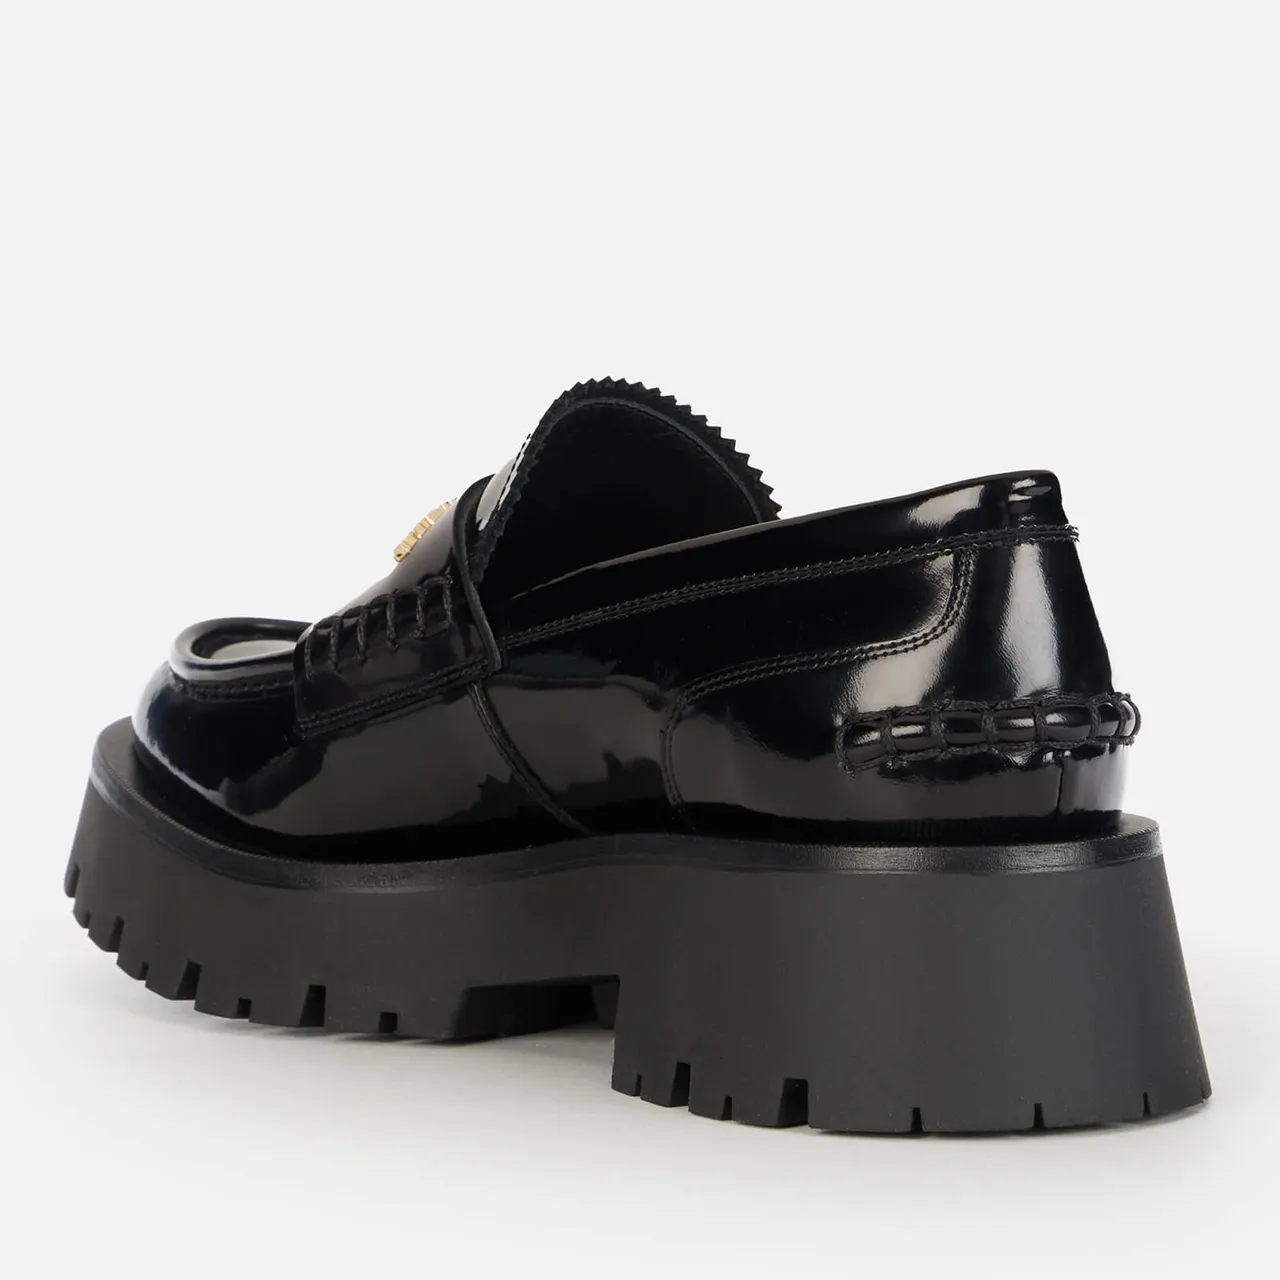 Alexander Wang Women's Carter Leather Loafers - Black - UK